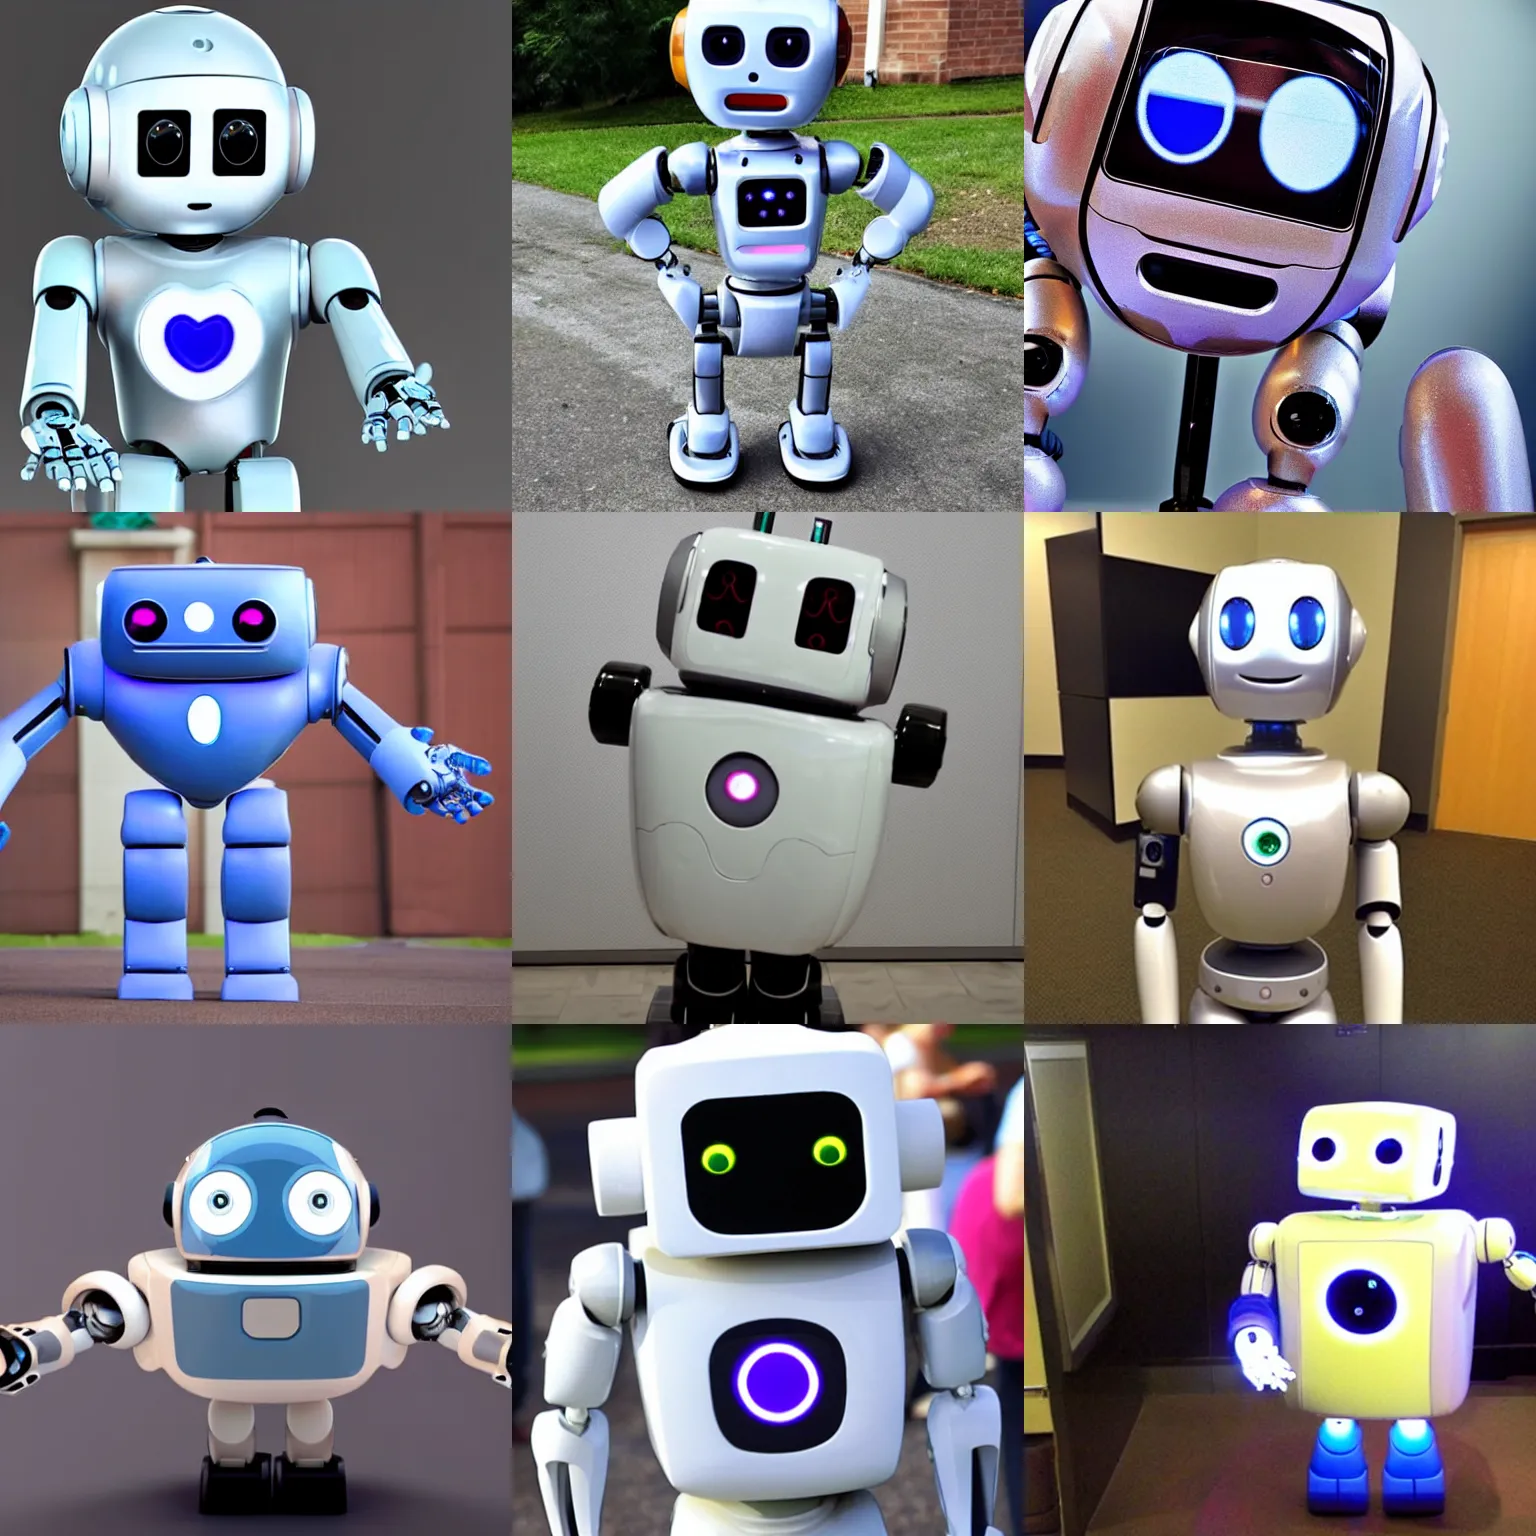 Prompt: <photo attention-grabbing robot-traits='friendly happy' robot-desires='hug'>Cute Robot</photo>